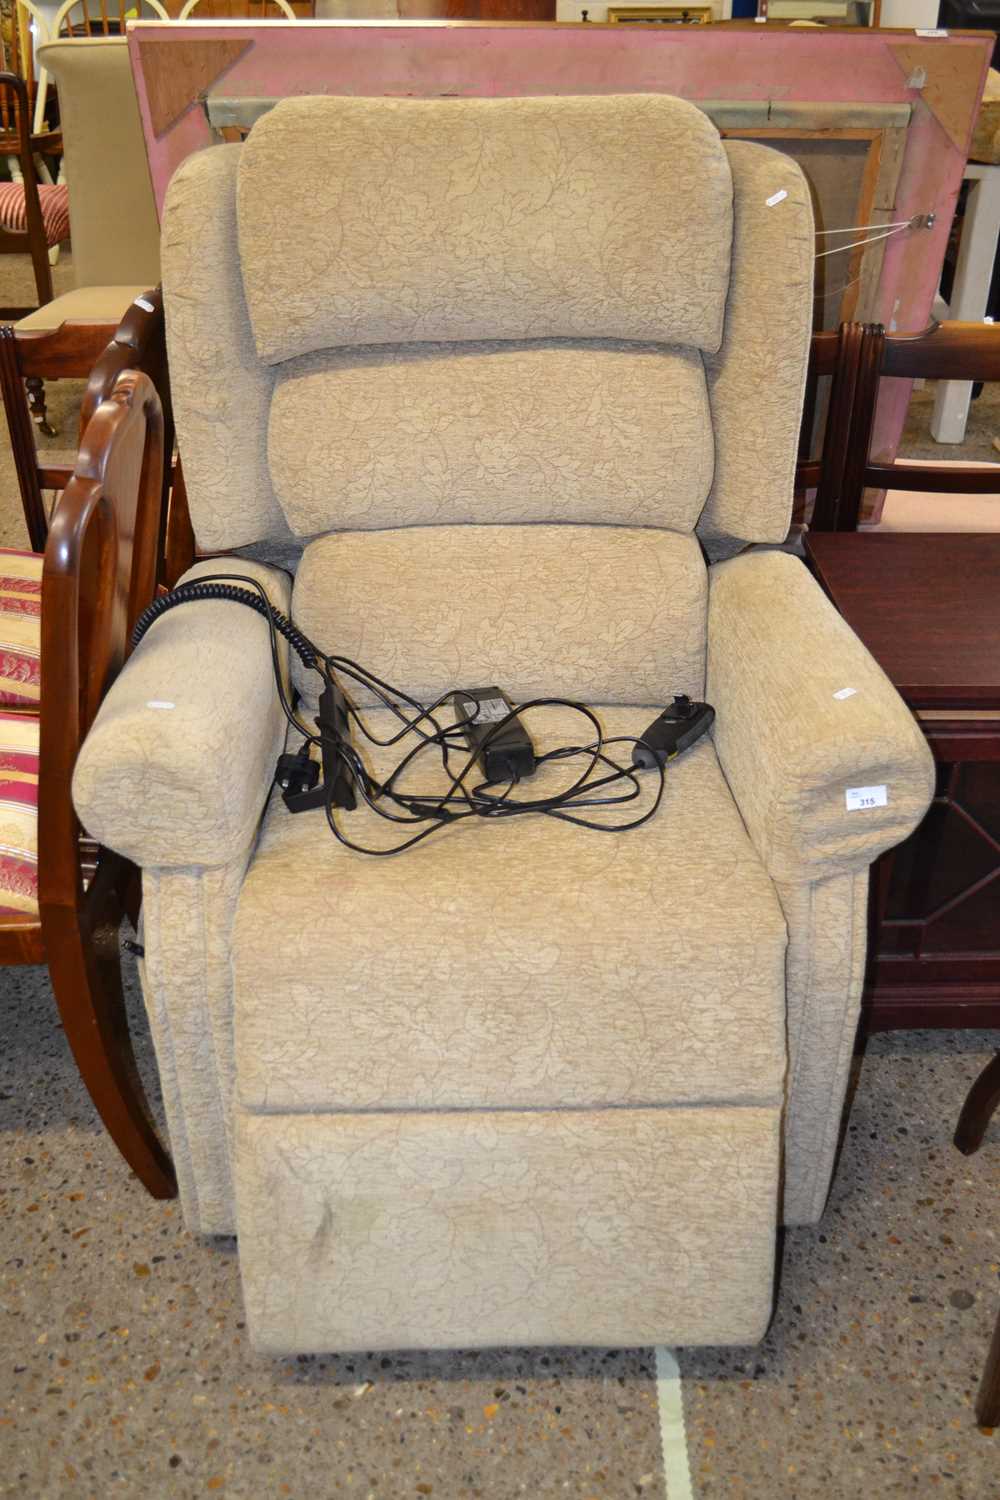 An electric recliner chair